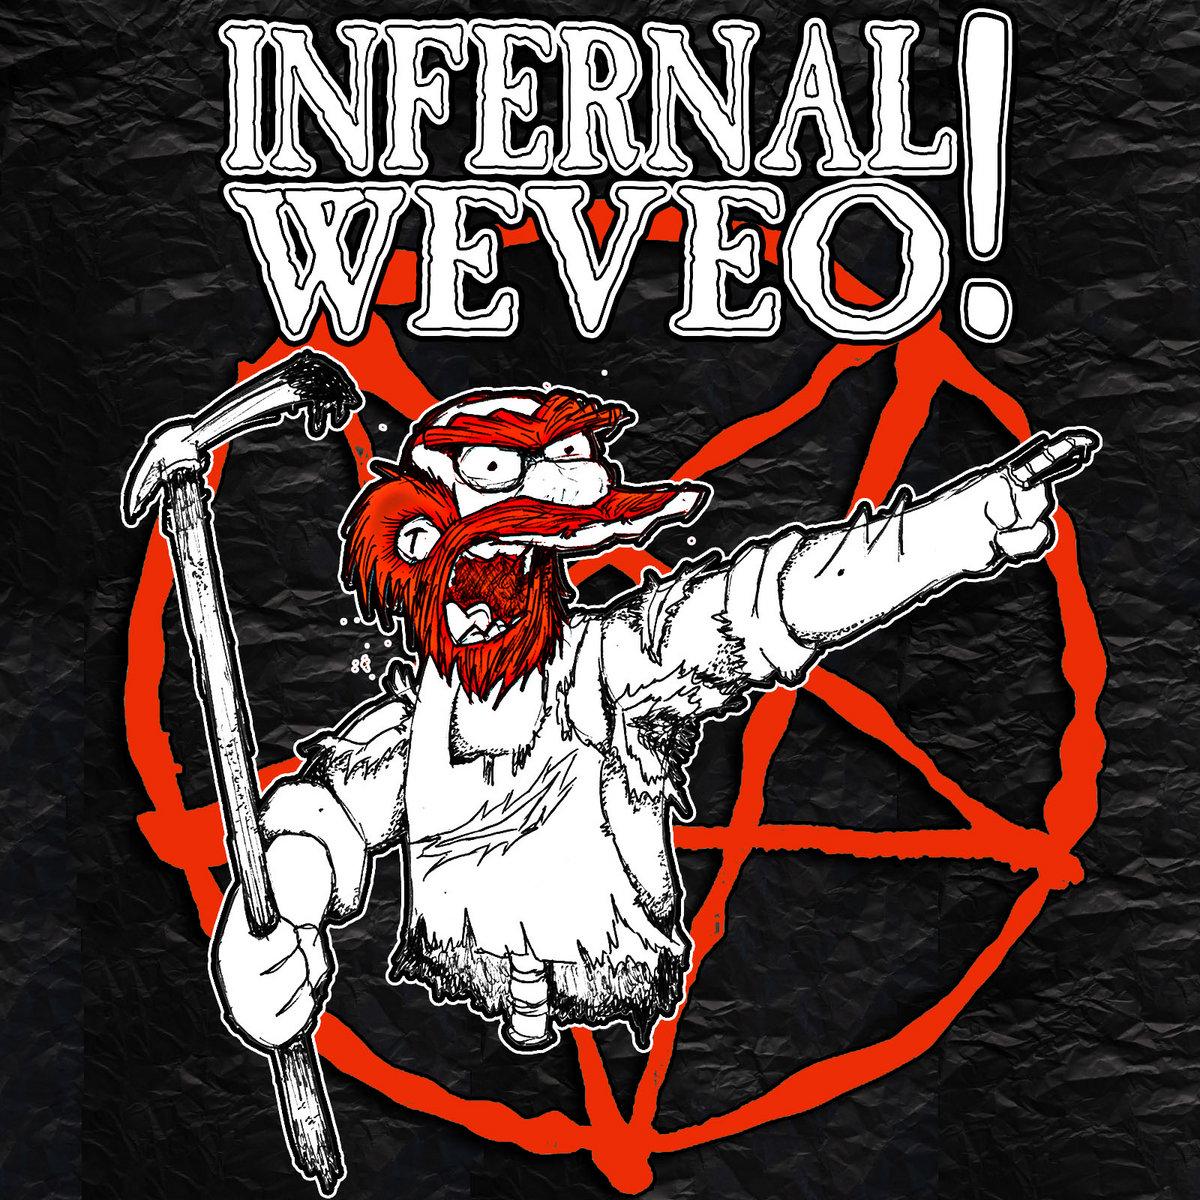 Infernal Weveo